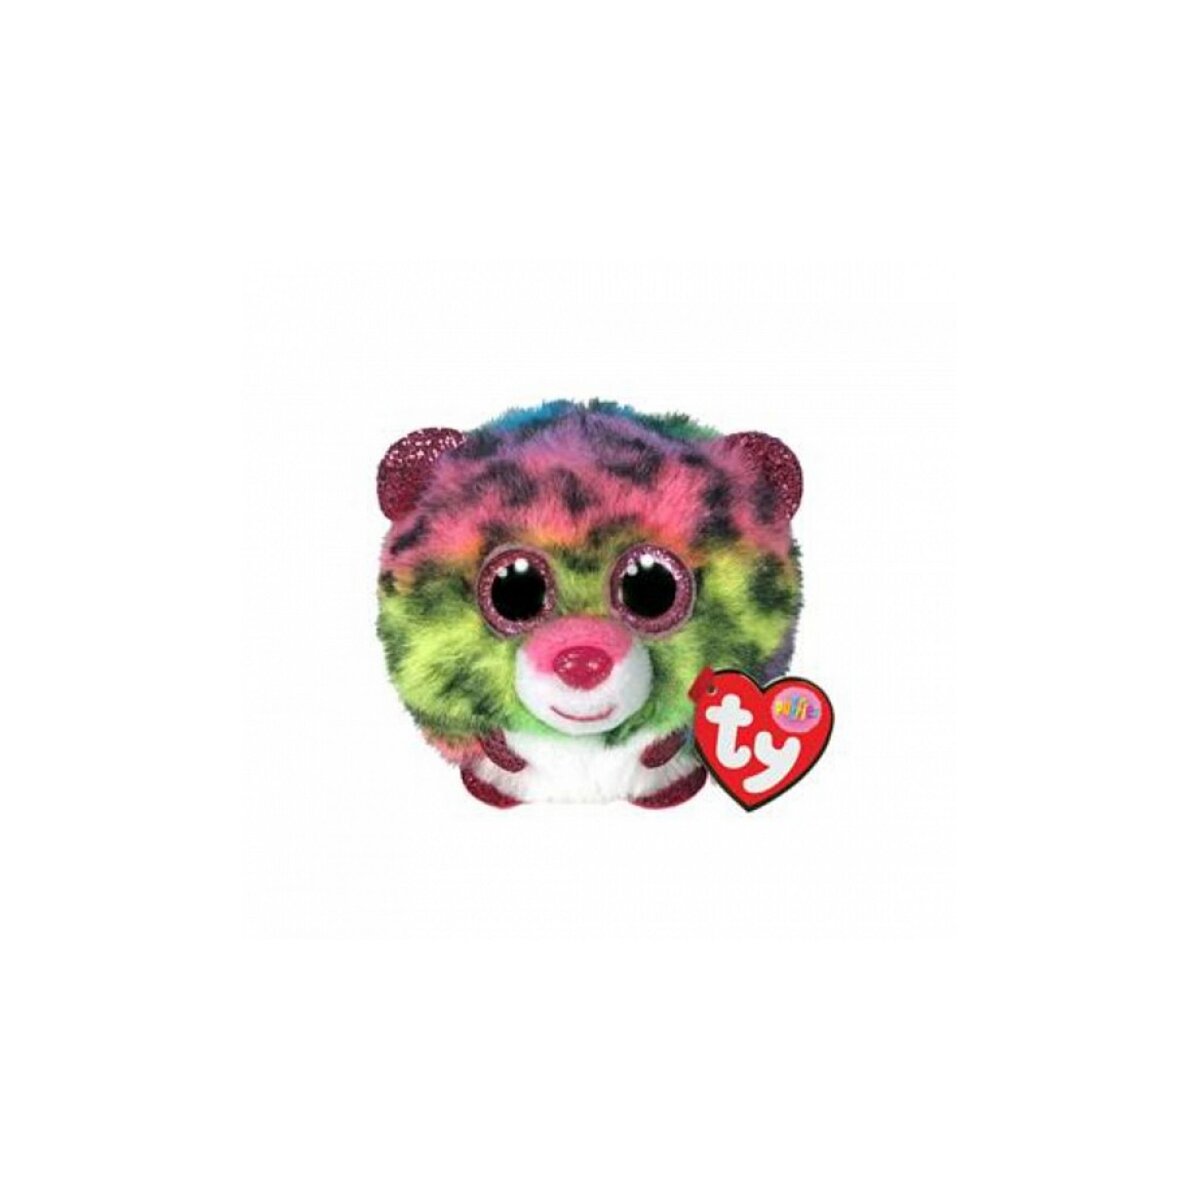 TY Puffies Beanie Balls DOTTY - rainbow leopard ball